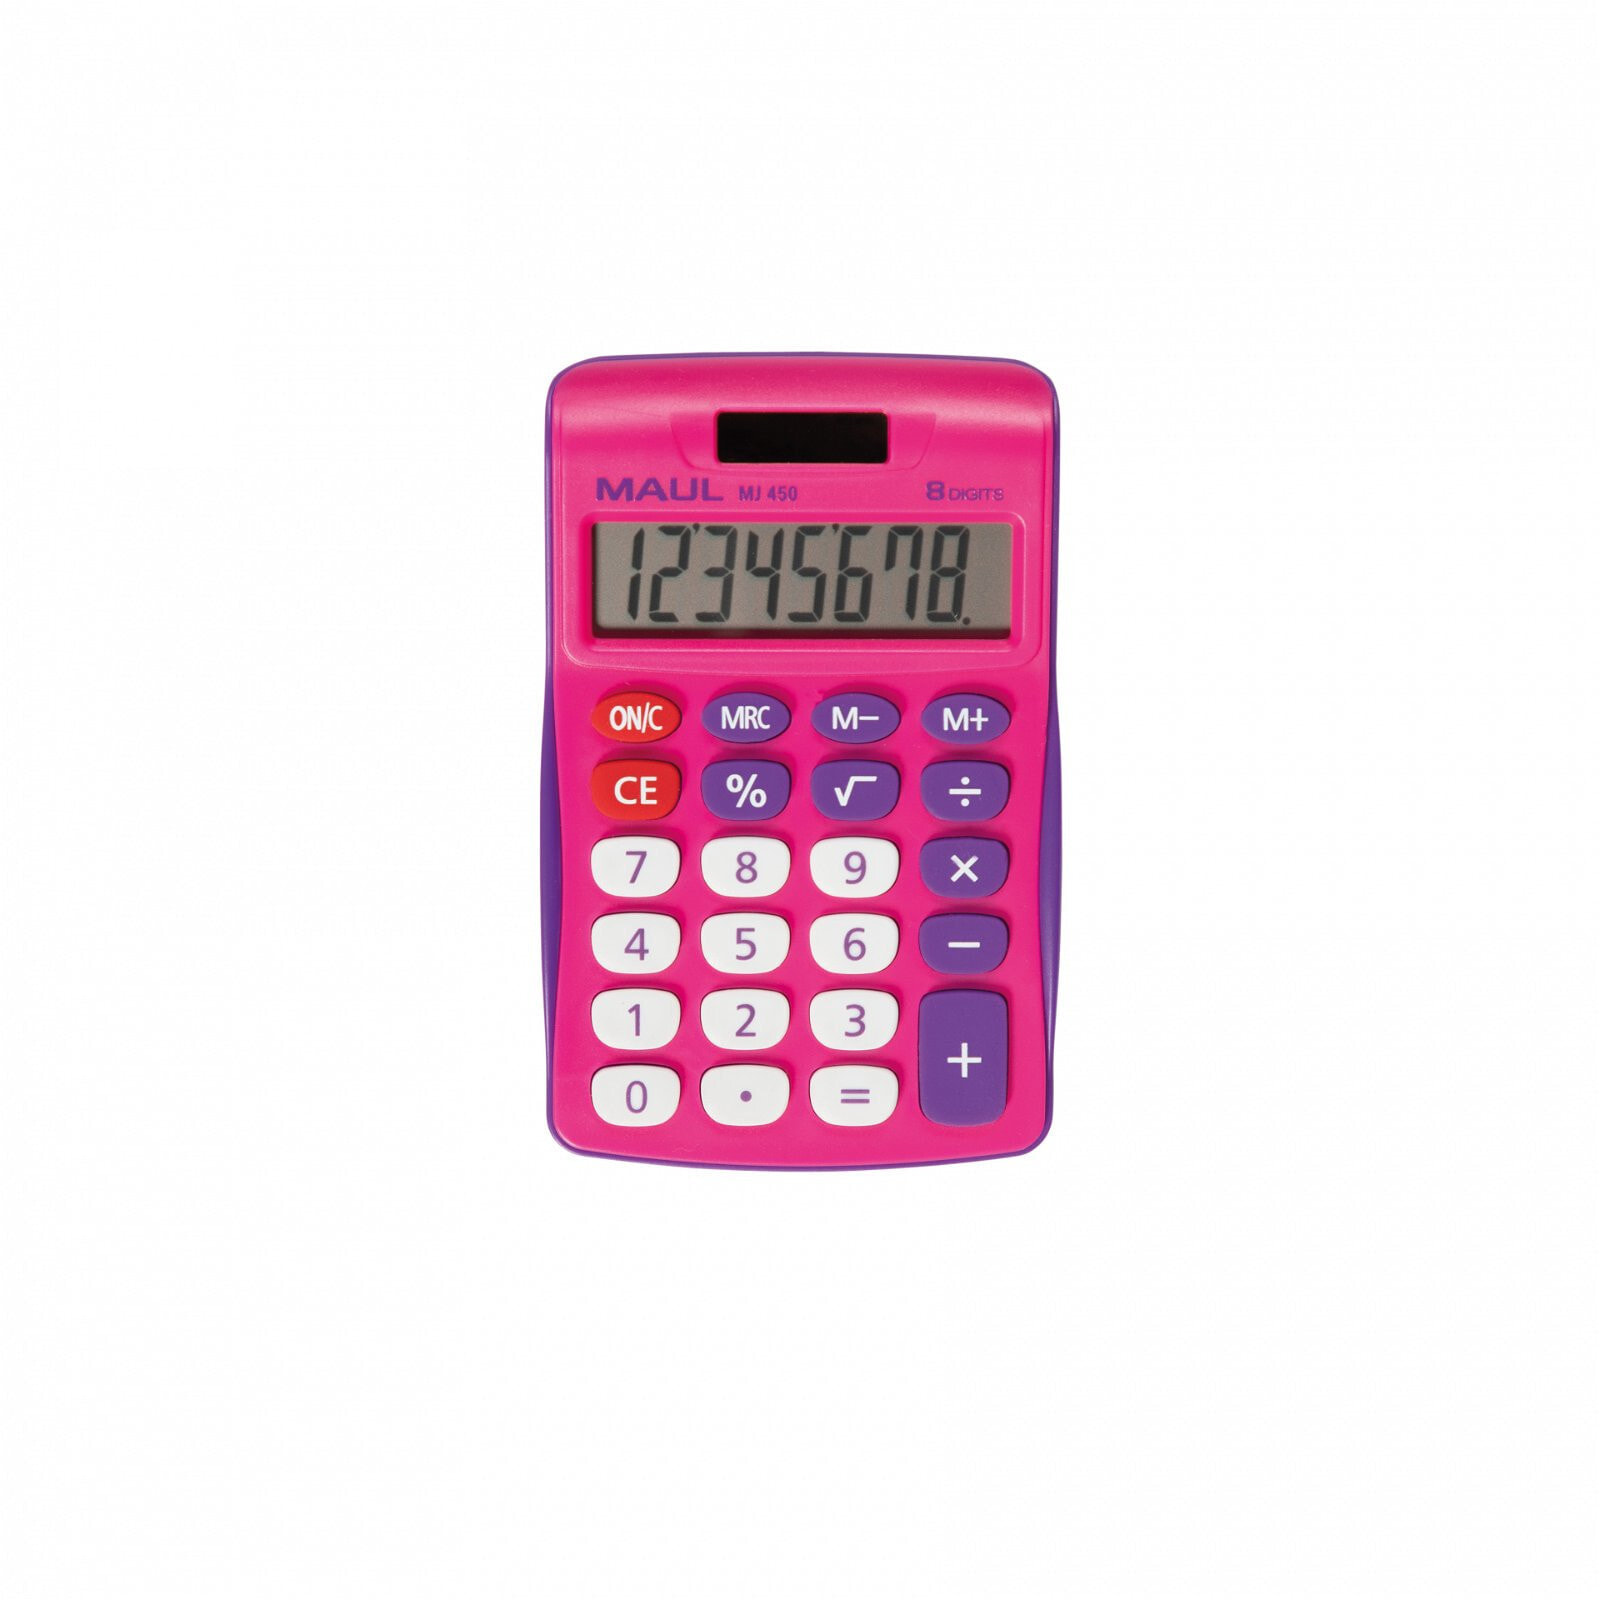 MAUL MJ 450 - Pocket - Display - 8 digits - 1 lines - Battery - Pink